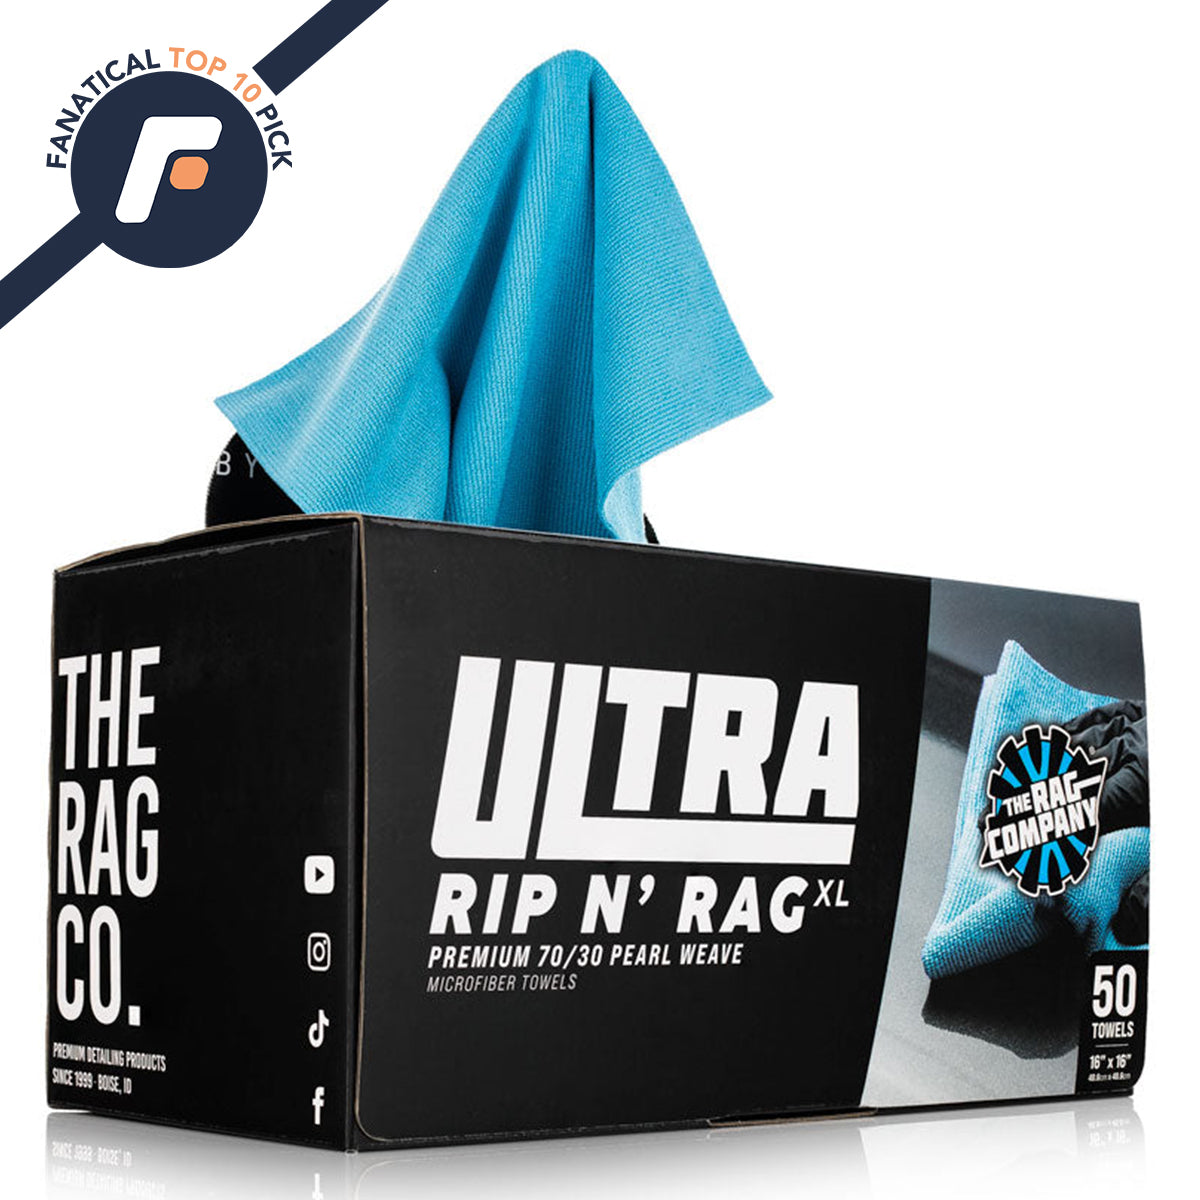 The Rag Company Ultra Rip N Rag XL - Multi Purpose Microfiber Towels